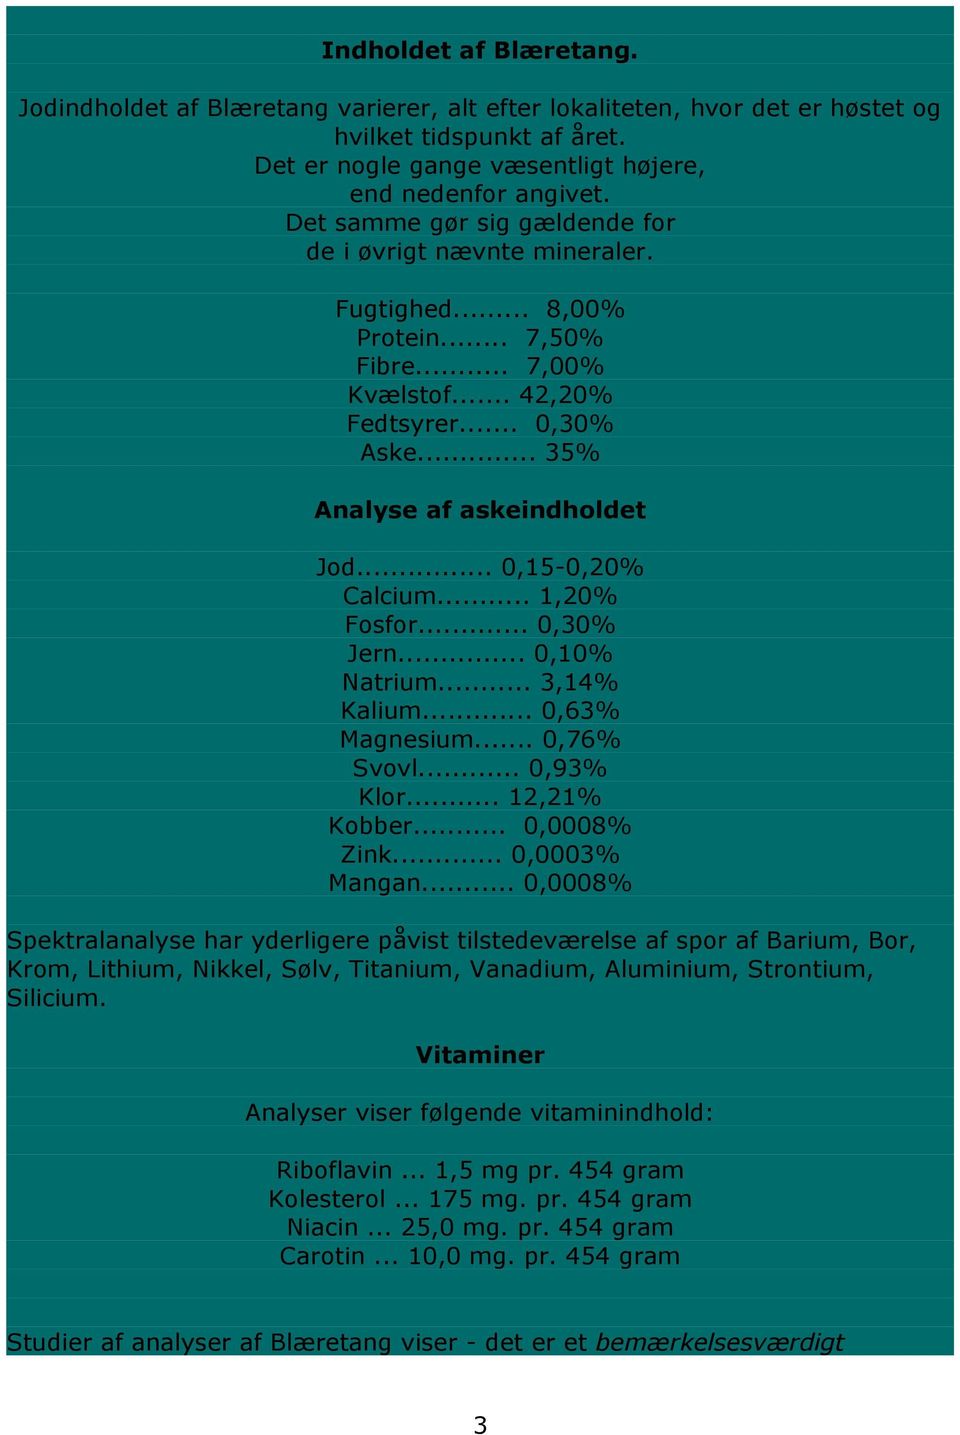 .. 0,15-0,20% Calcium... 1,20% Fosfor... 0,30% Jern... 0,10% Natrium... 3,14% Kalium... 0,63% Magnesium... 0,76% Svovl... 0,93% Klor... 12,21% Kobber... 0,0008% Zink... 0,0003% Mangan.